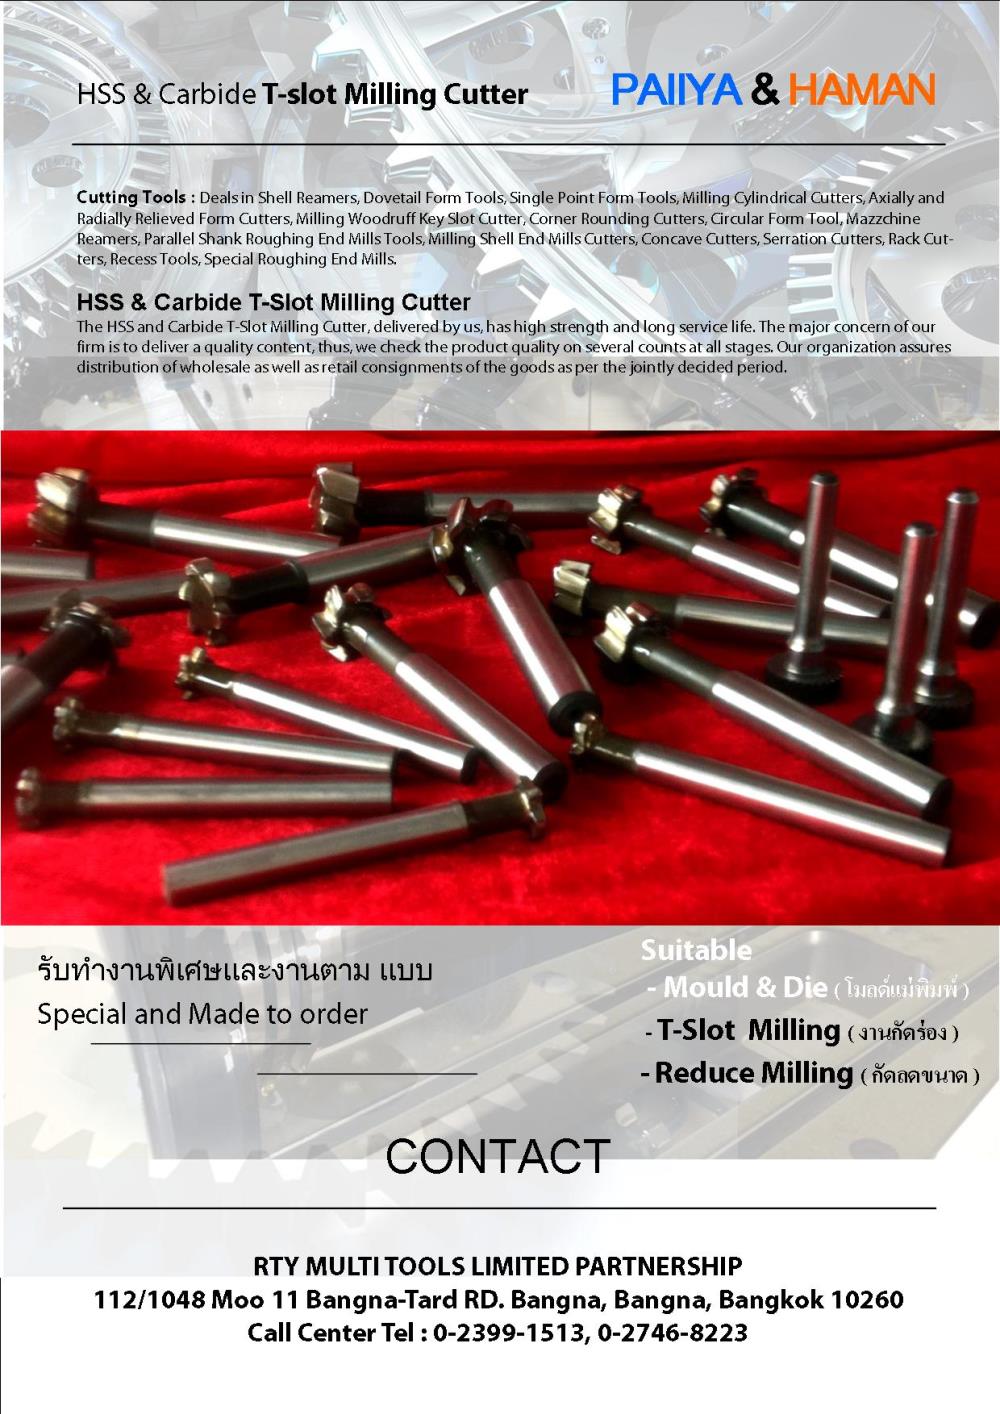 HSS-T-Slot,Cutting Tools, Hss T-Slot, Carbide T-Slot, Milling, Milling Cutter, Hss, ,PAIIYA and HAMAN,Tool and Tooling/Cutting Tools